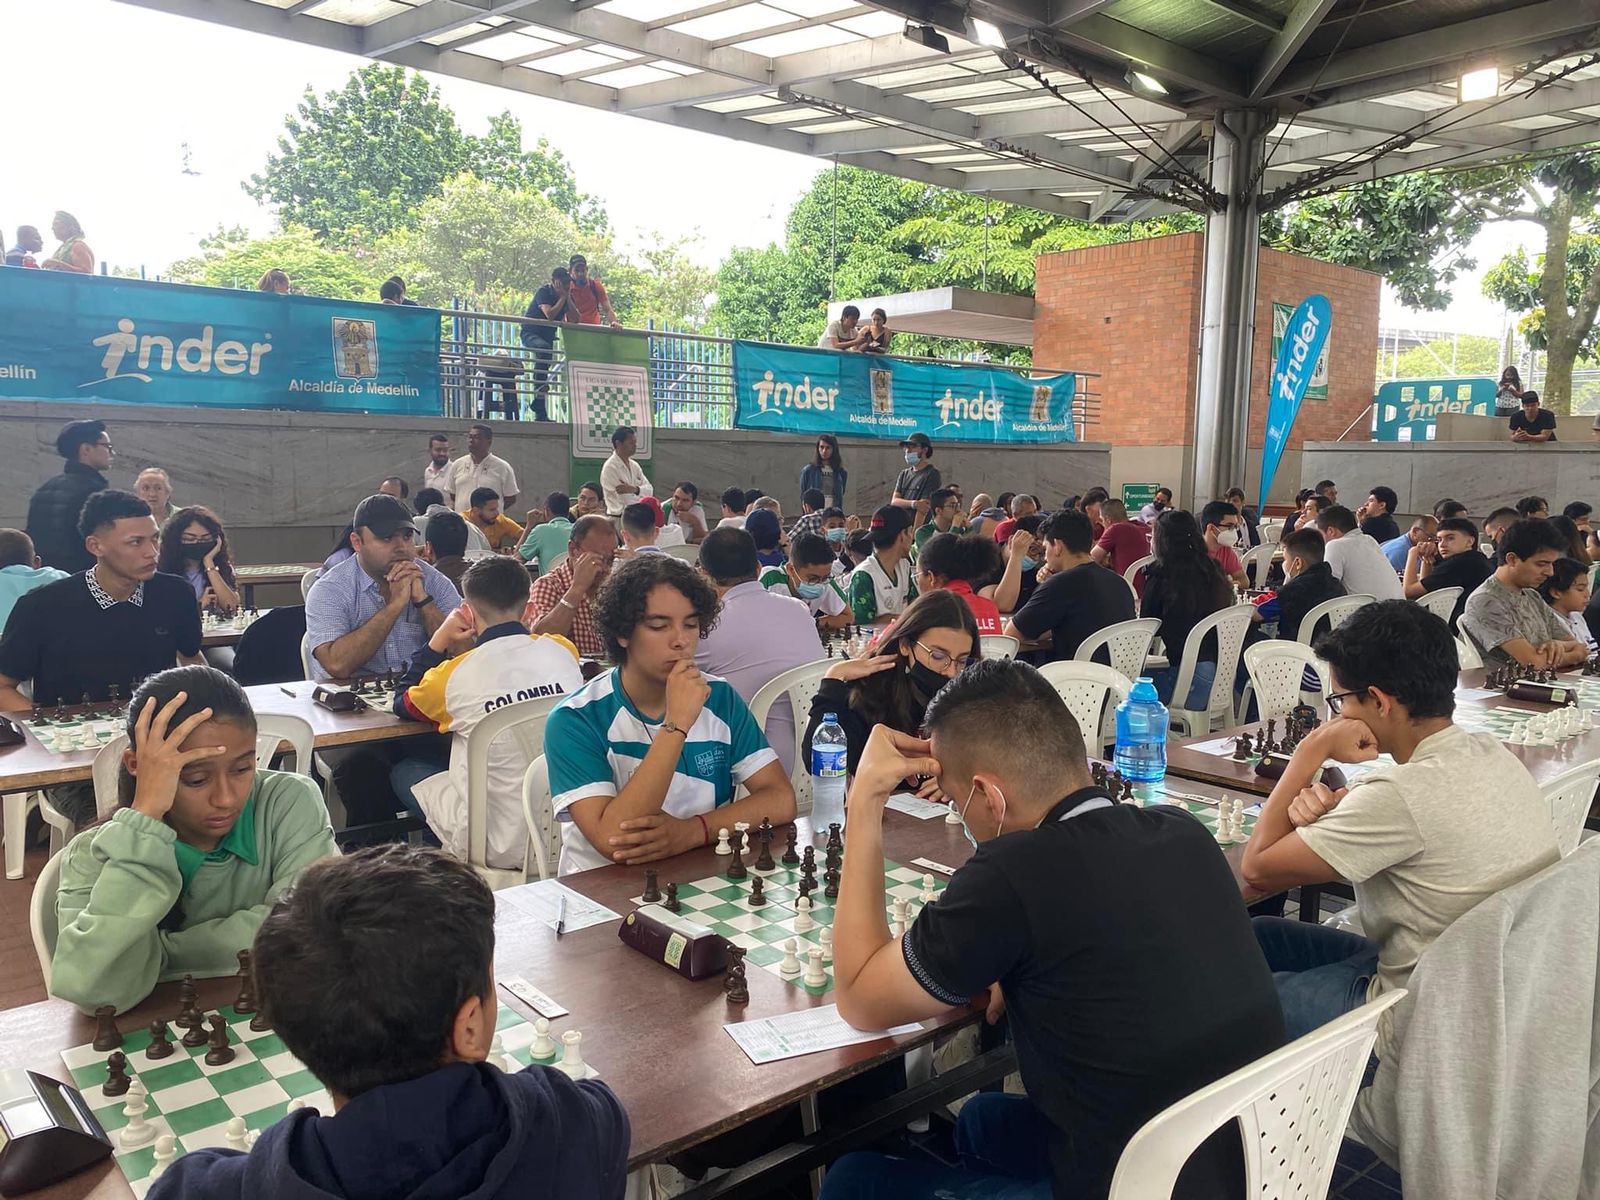 Desde este miércoles, el ajedrez se toma a Medellín